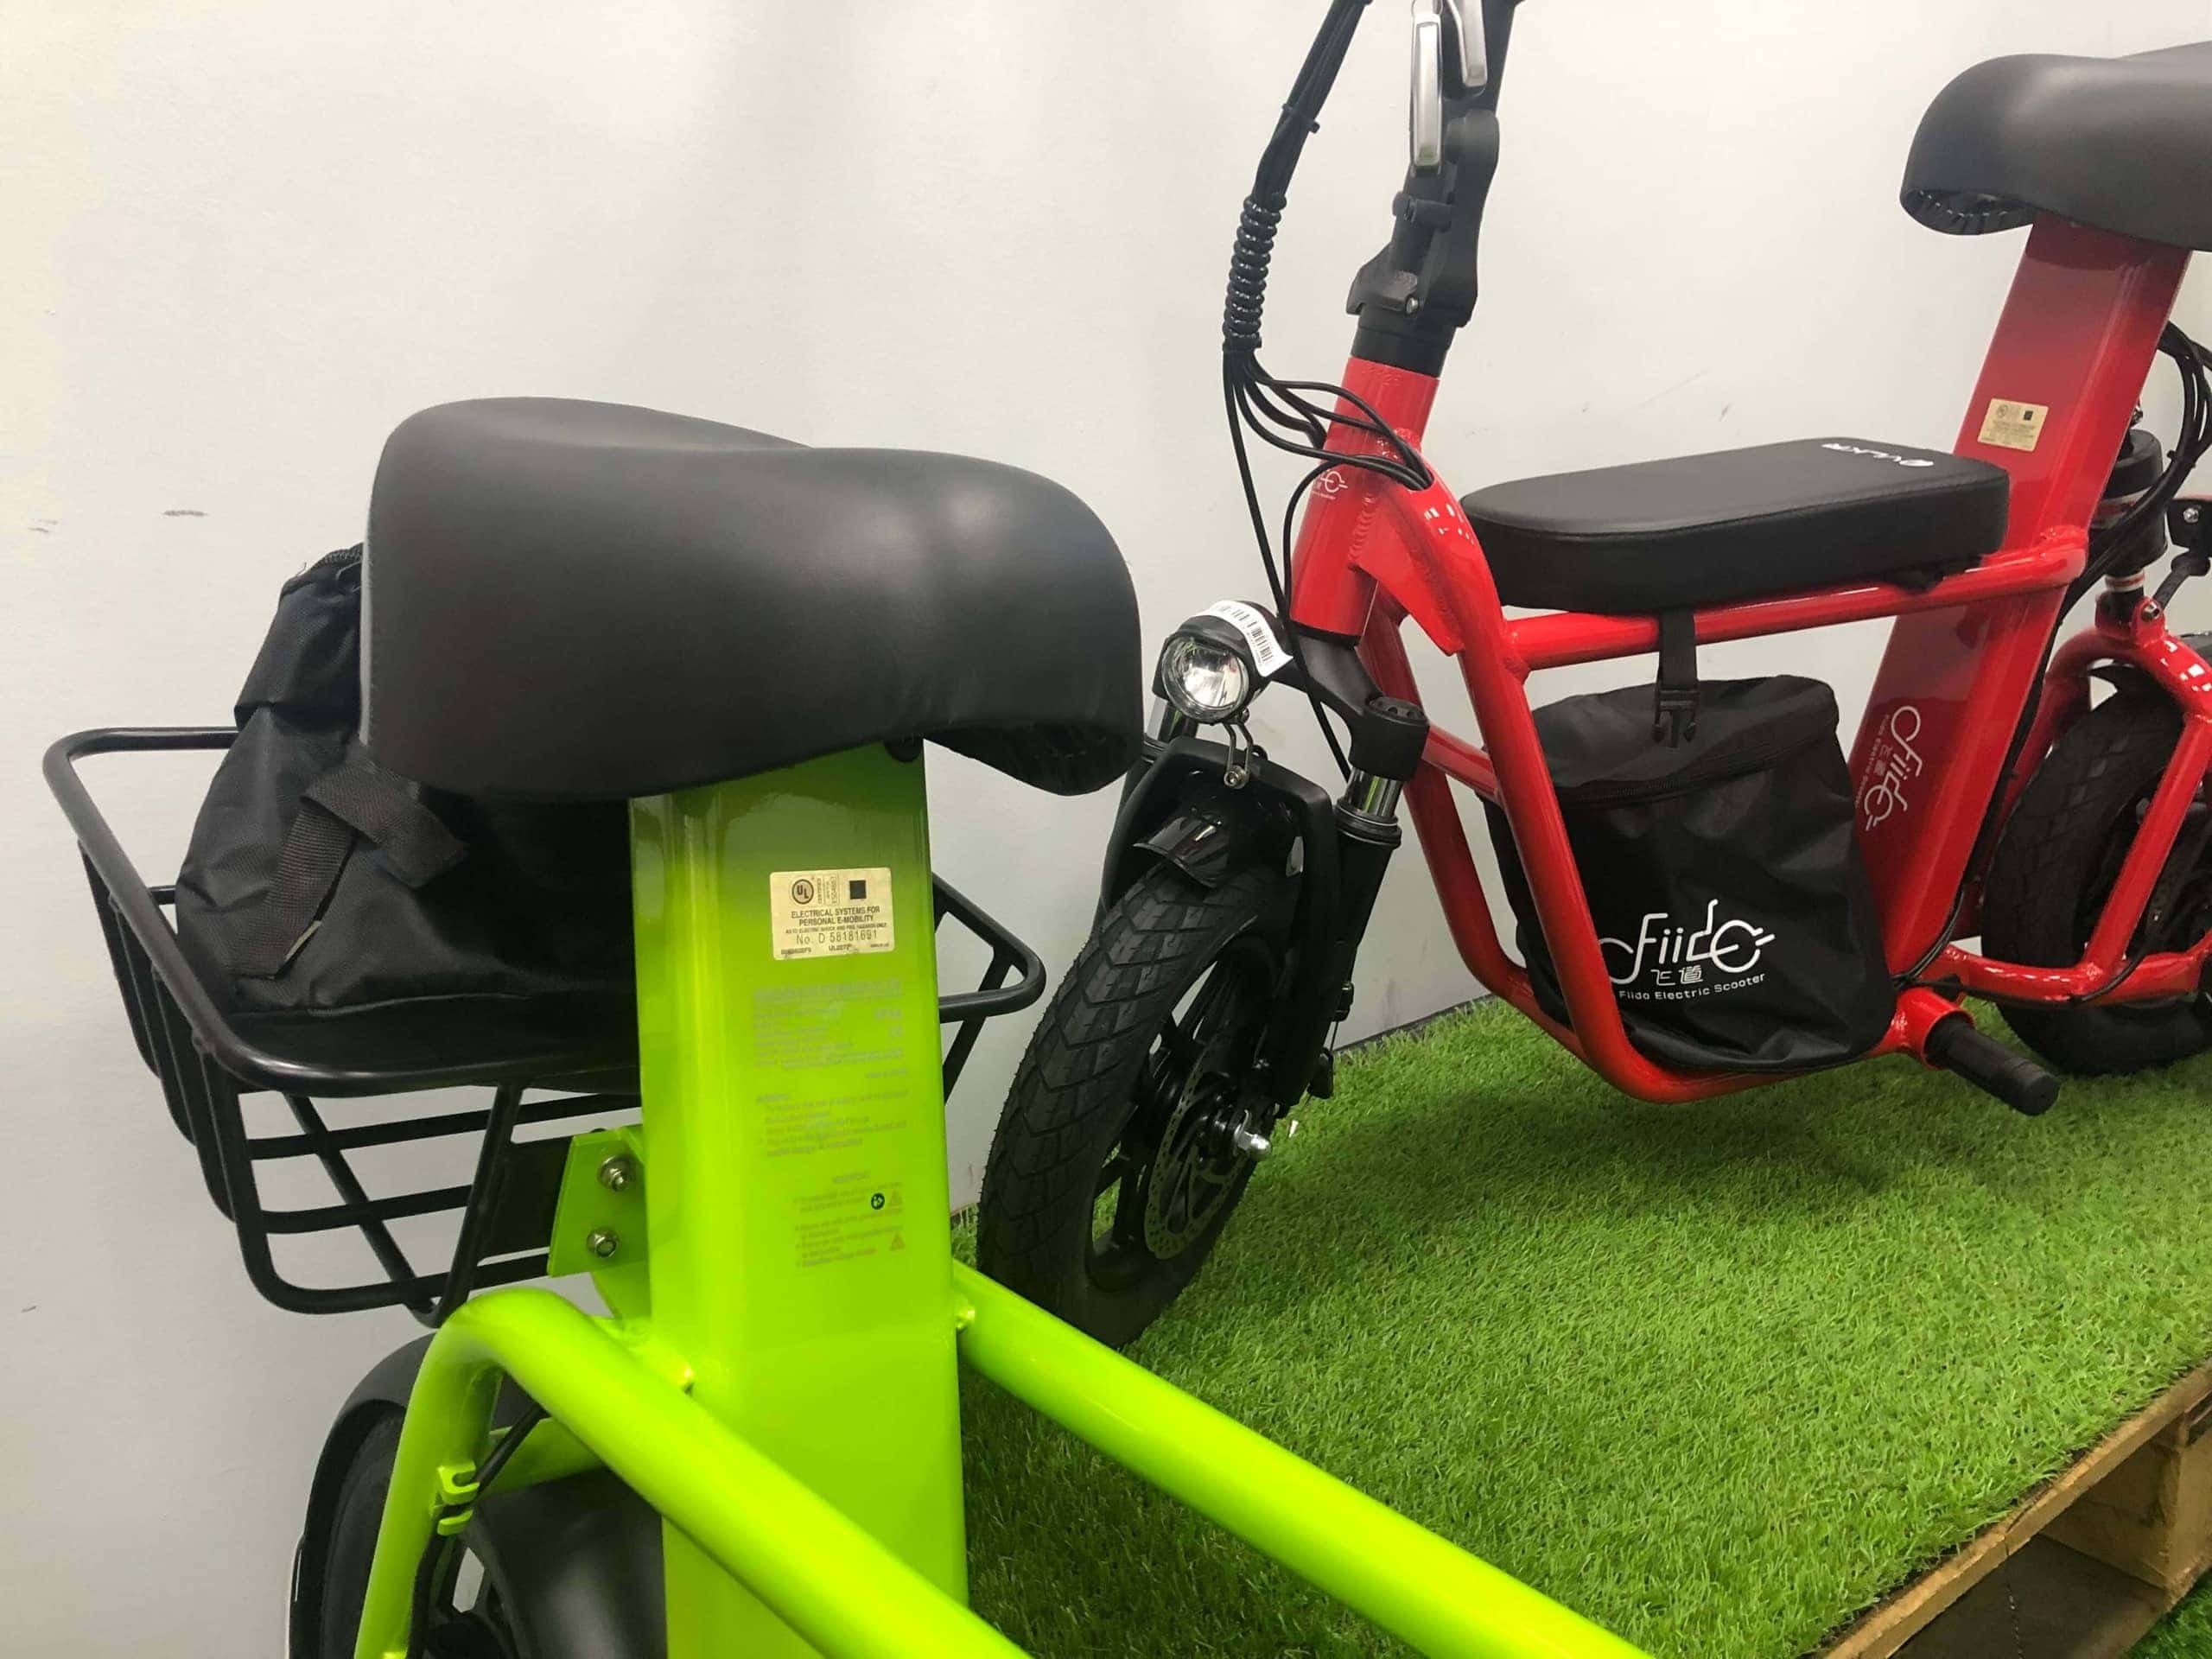 FIIDO UL2272 certified electric scooter